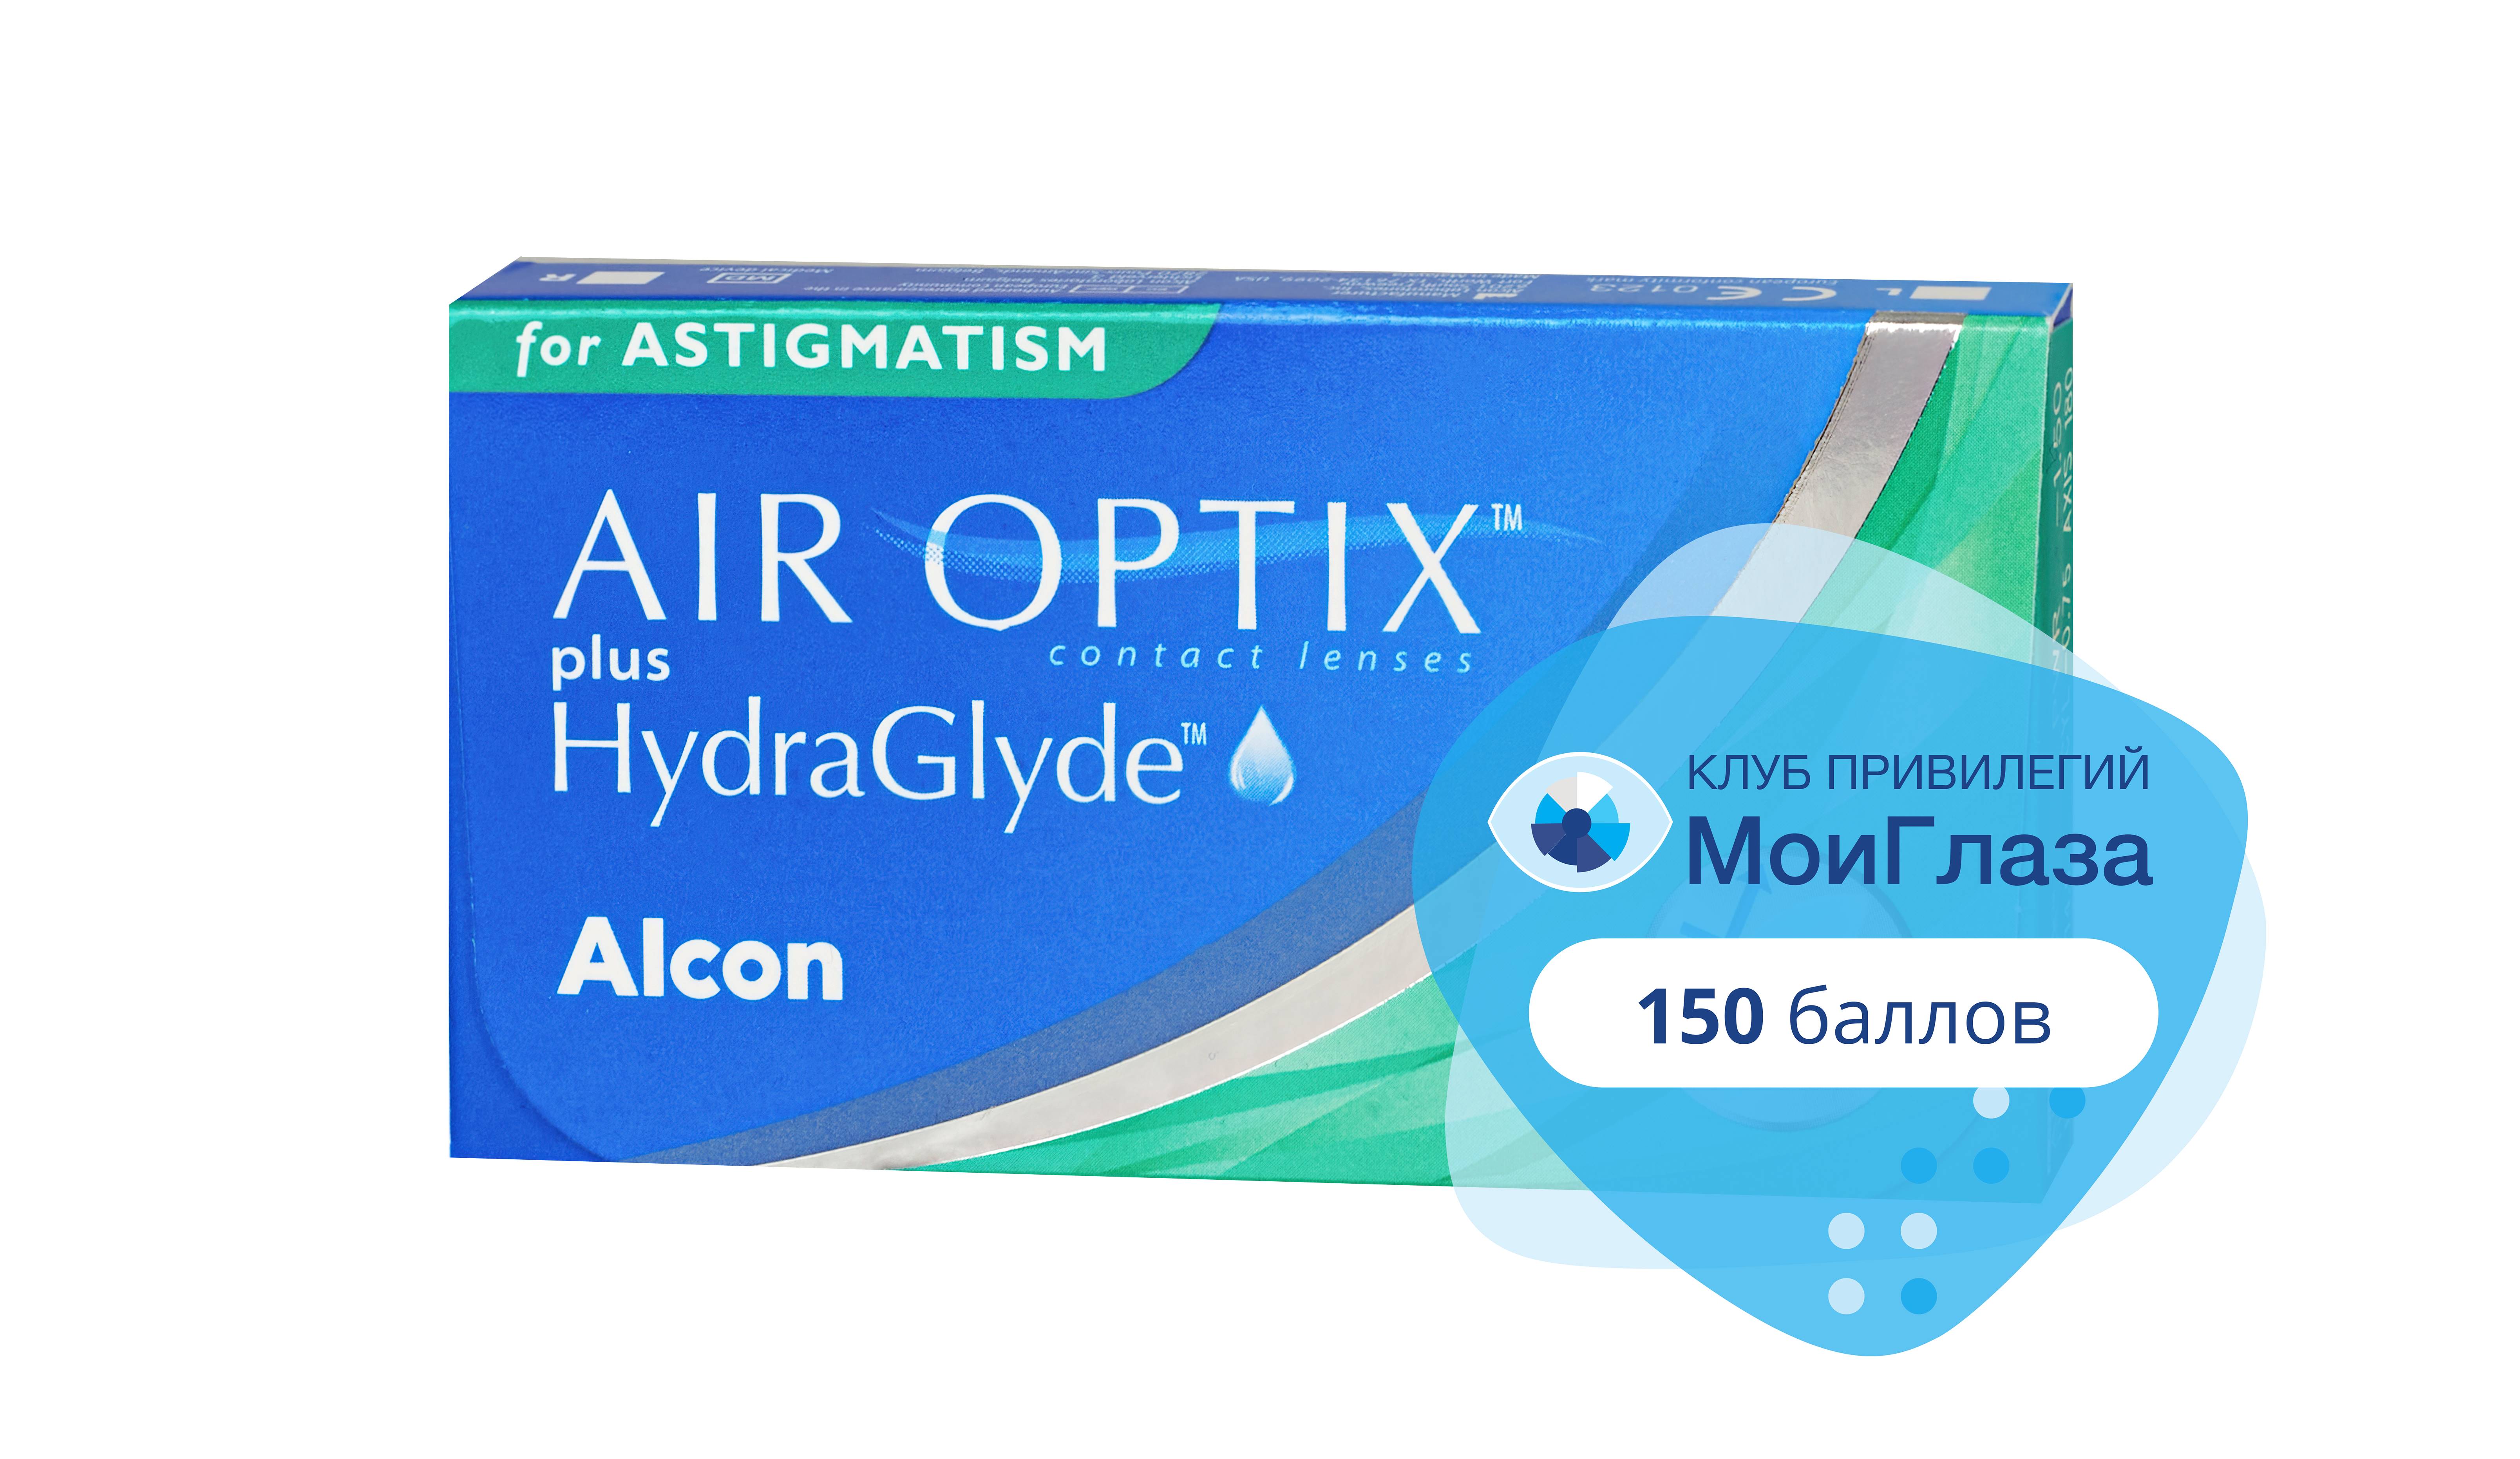 Air Optix plus HydraGlyde For Astigmatism </br> (3 линзы)